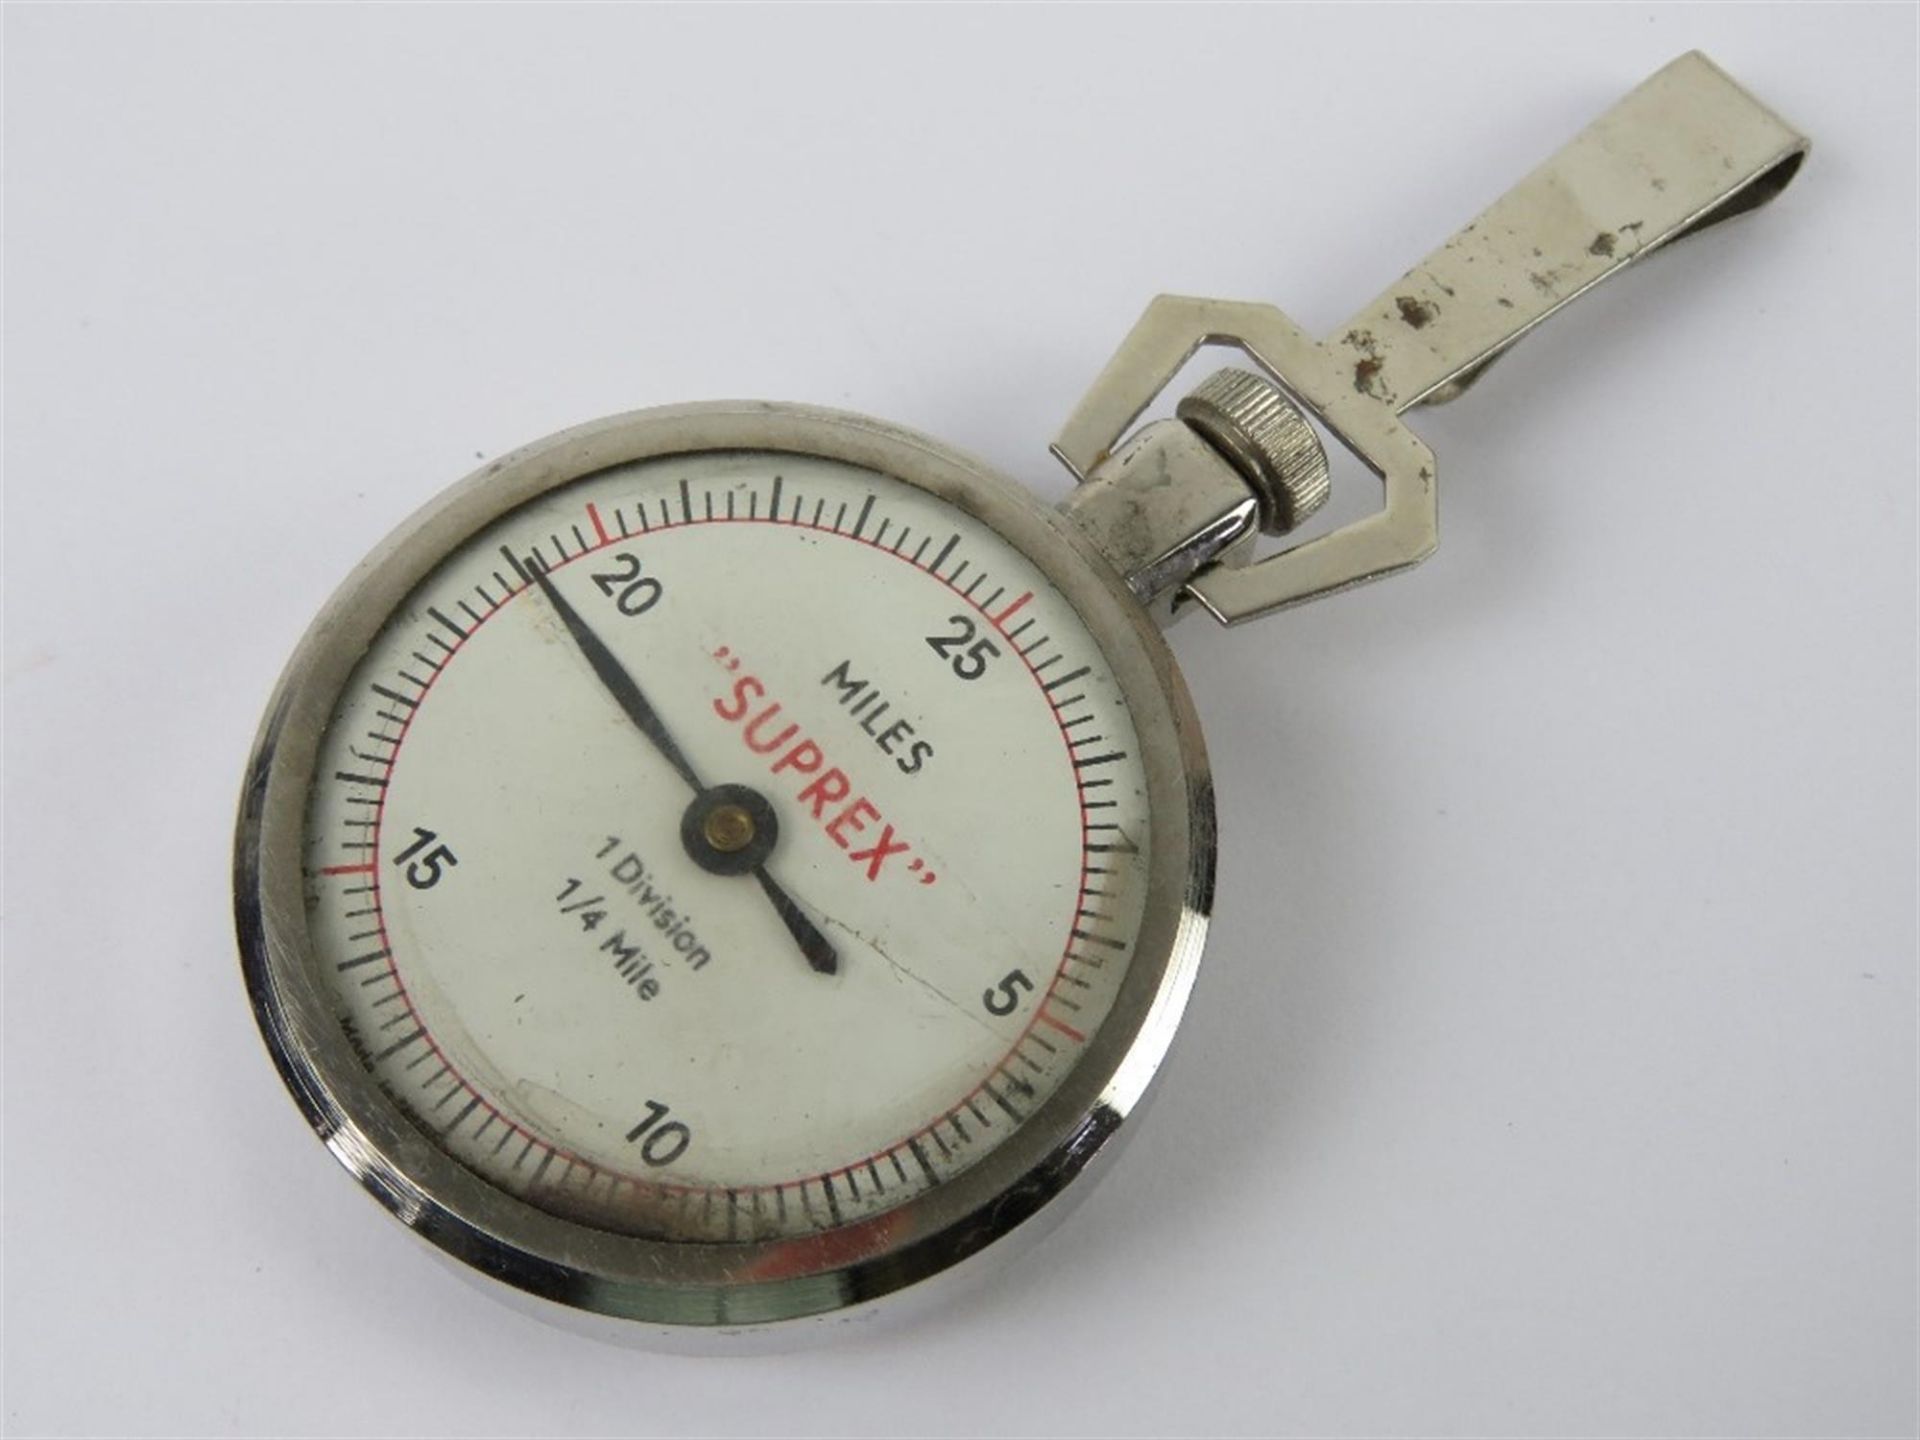 A vintage Suprex Pedometer 25 Mile Dial